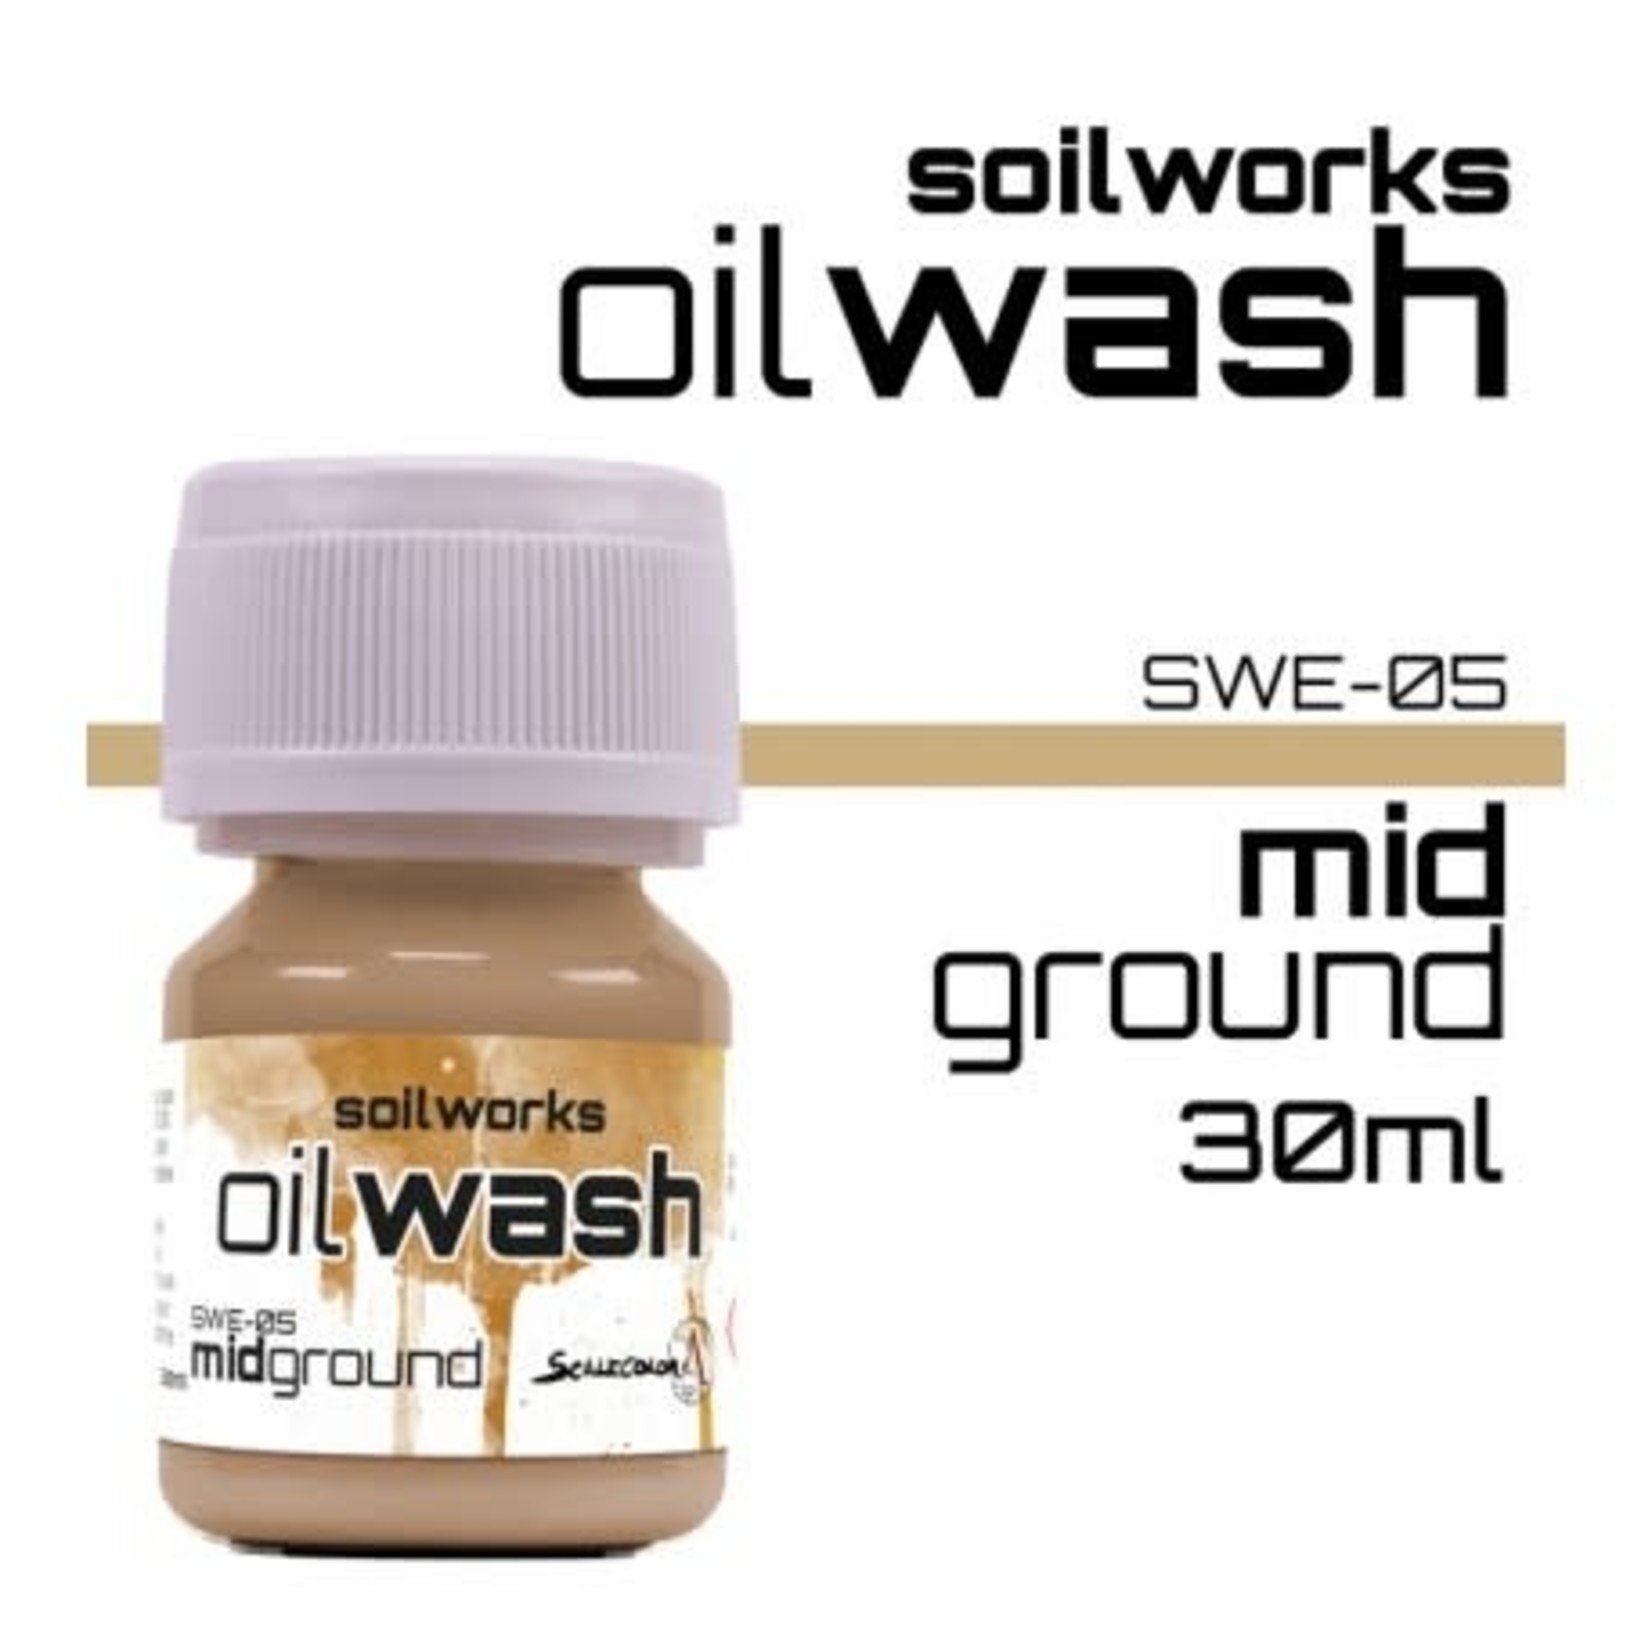 Scale 75 Soil Works Oil Wash SWE-05 Midground 30ml